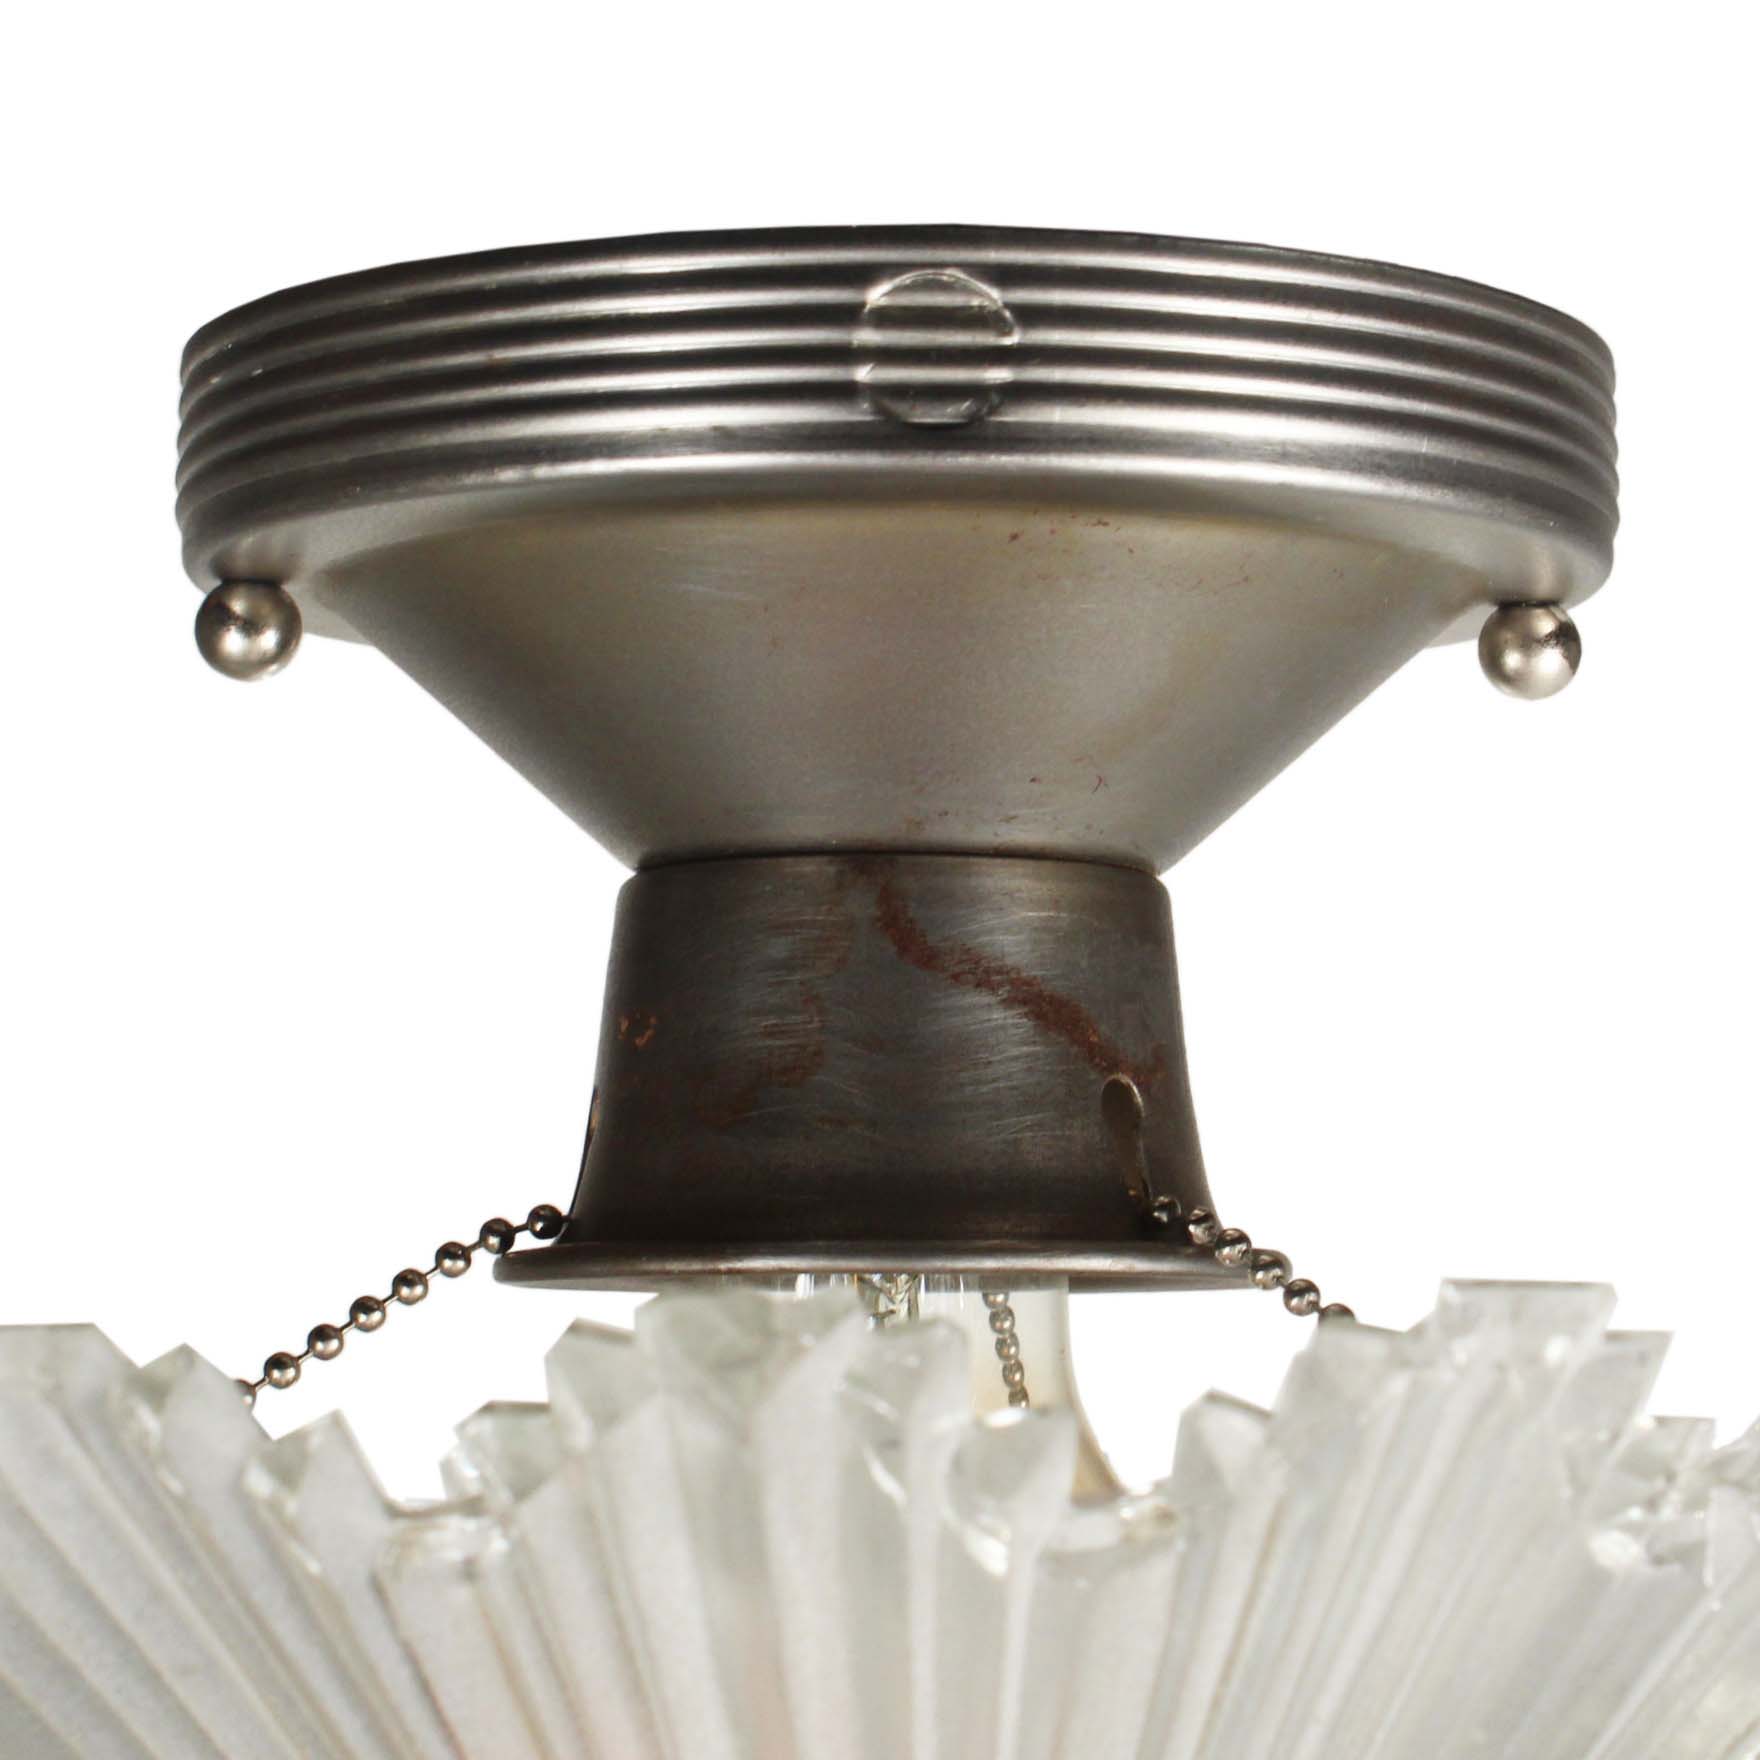 SOLD Antique Art Deco Flush Mount Light Fixture with Original Glass Shade-67778